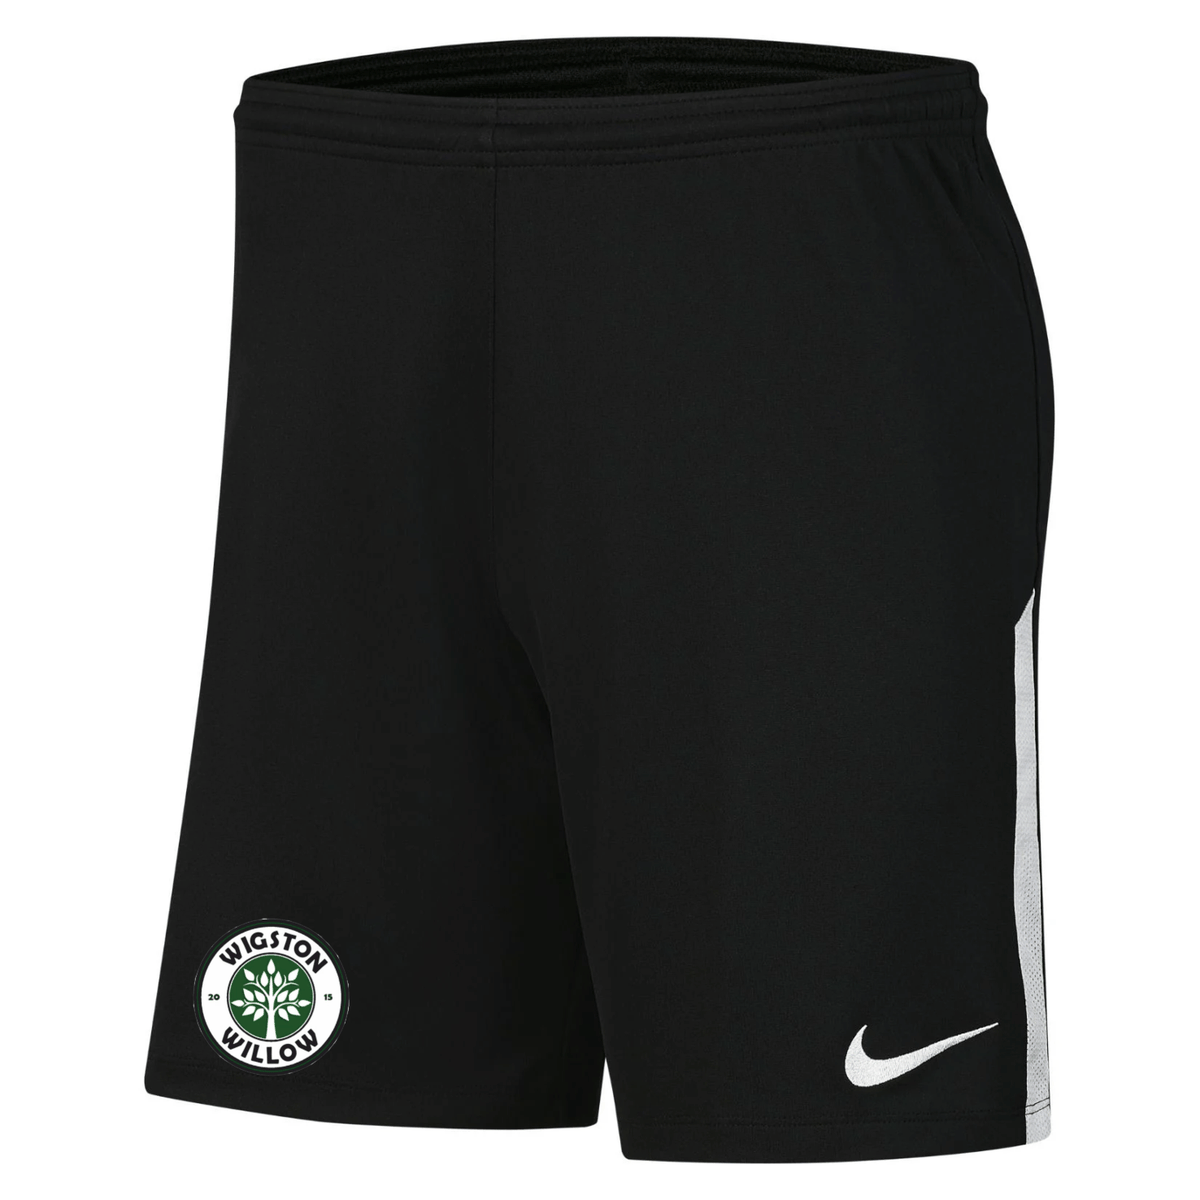 Wigston Willow FC - League Knit Shorts